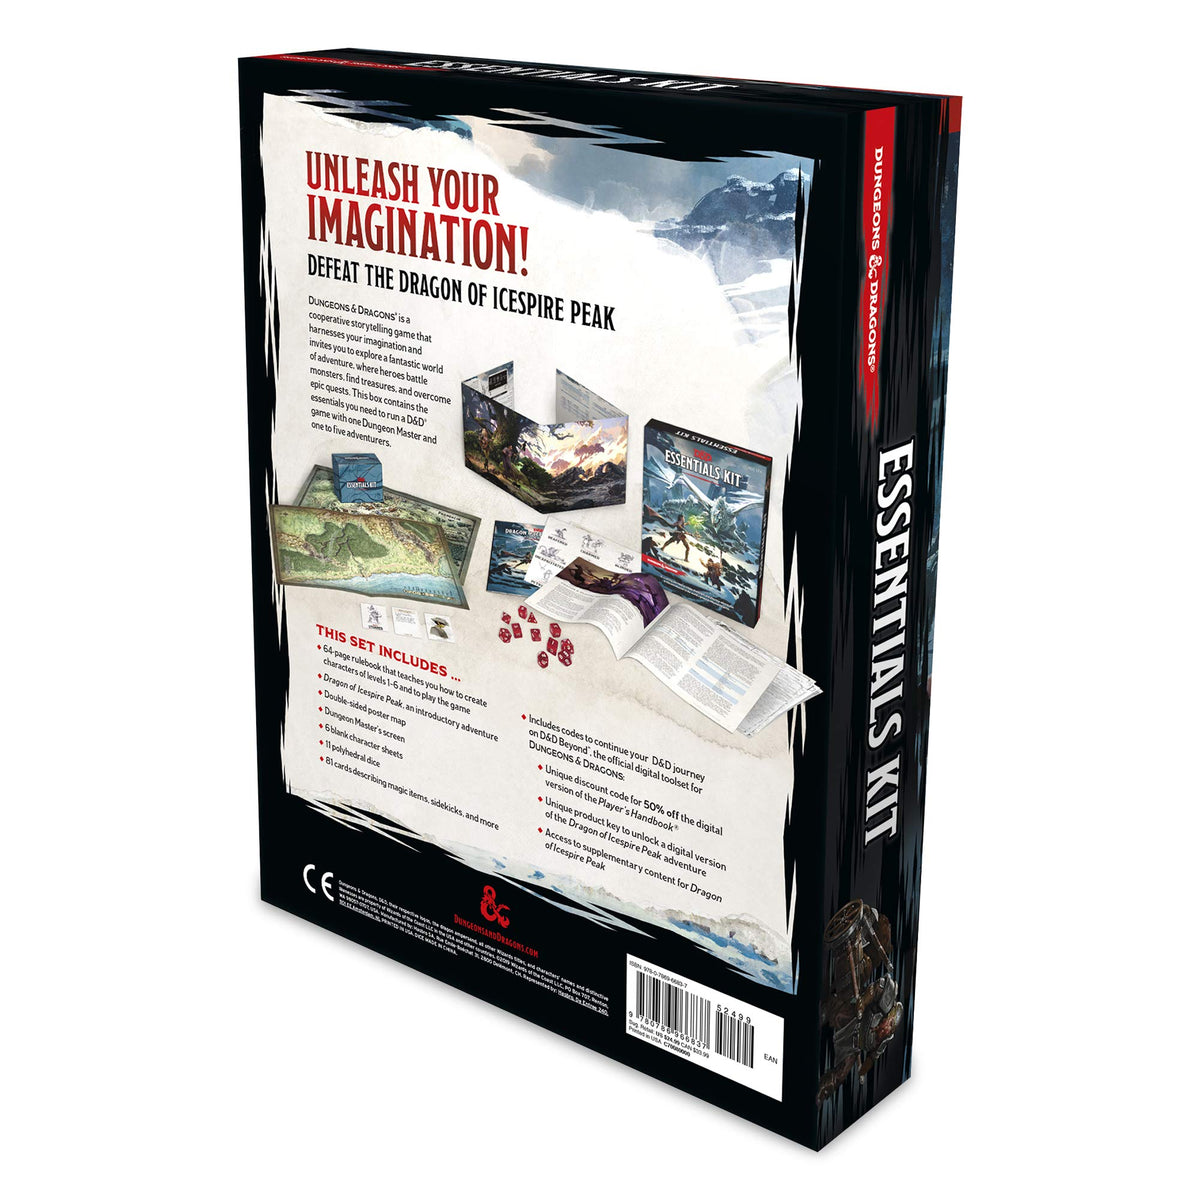 Dungeons &amp; Dragons Essentials Kit